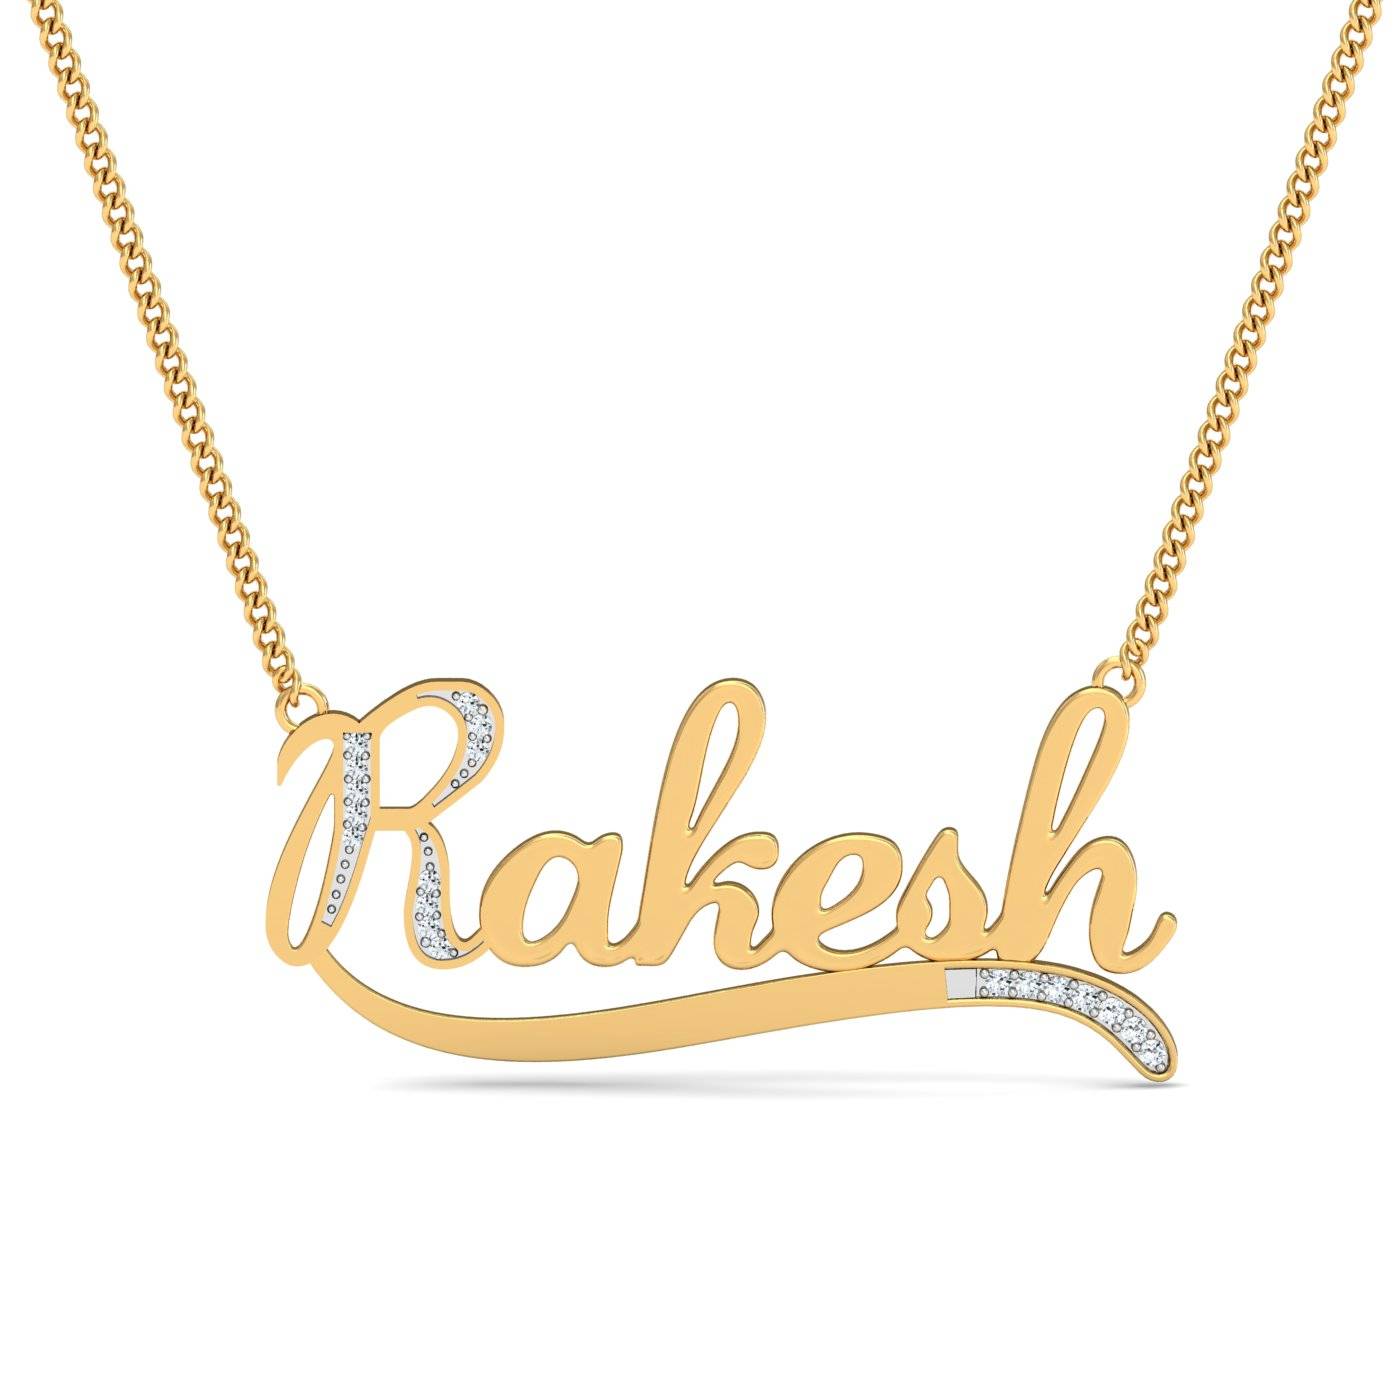 Rakesh Name Pendant